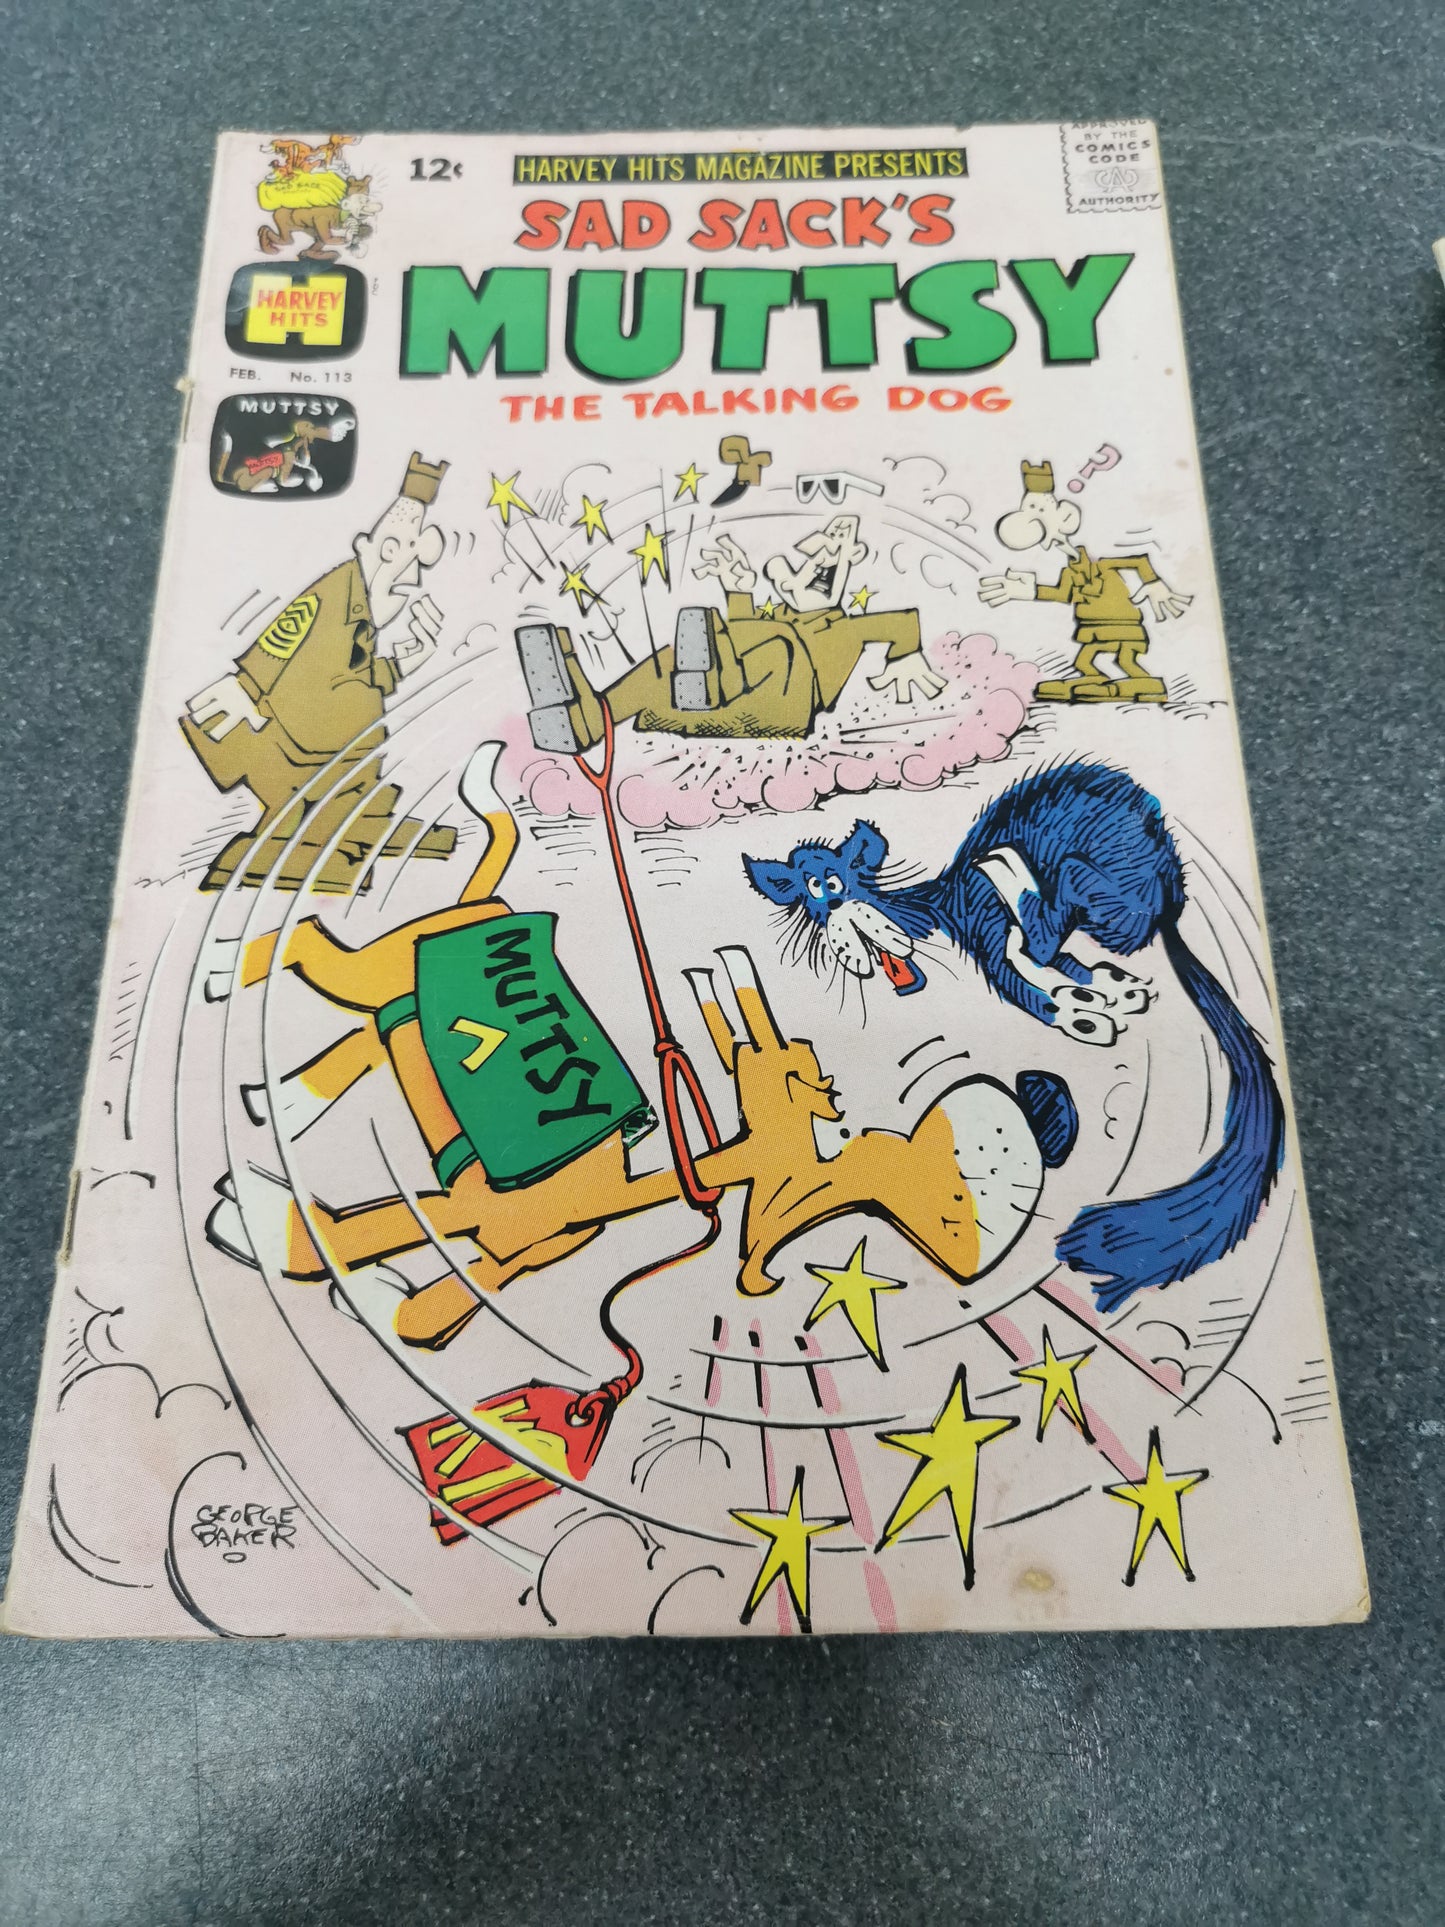 Harvey Hits presents Muttsy The Talking Dog #113 1967 Harvey Publications comics